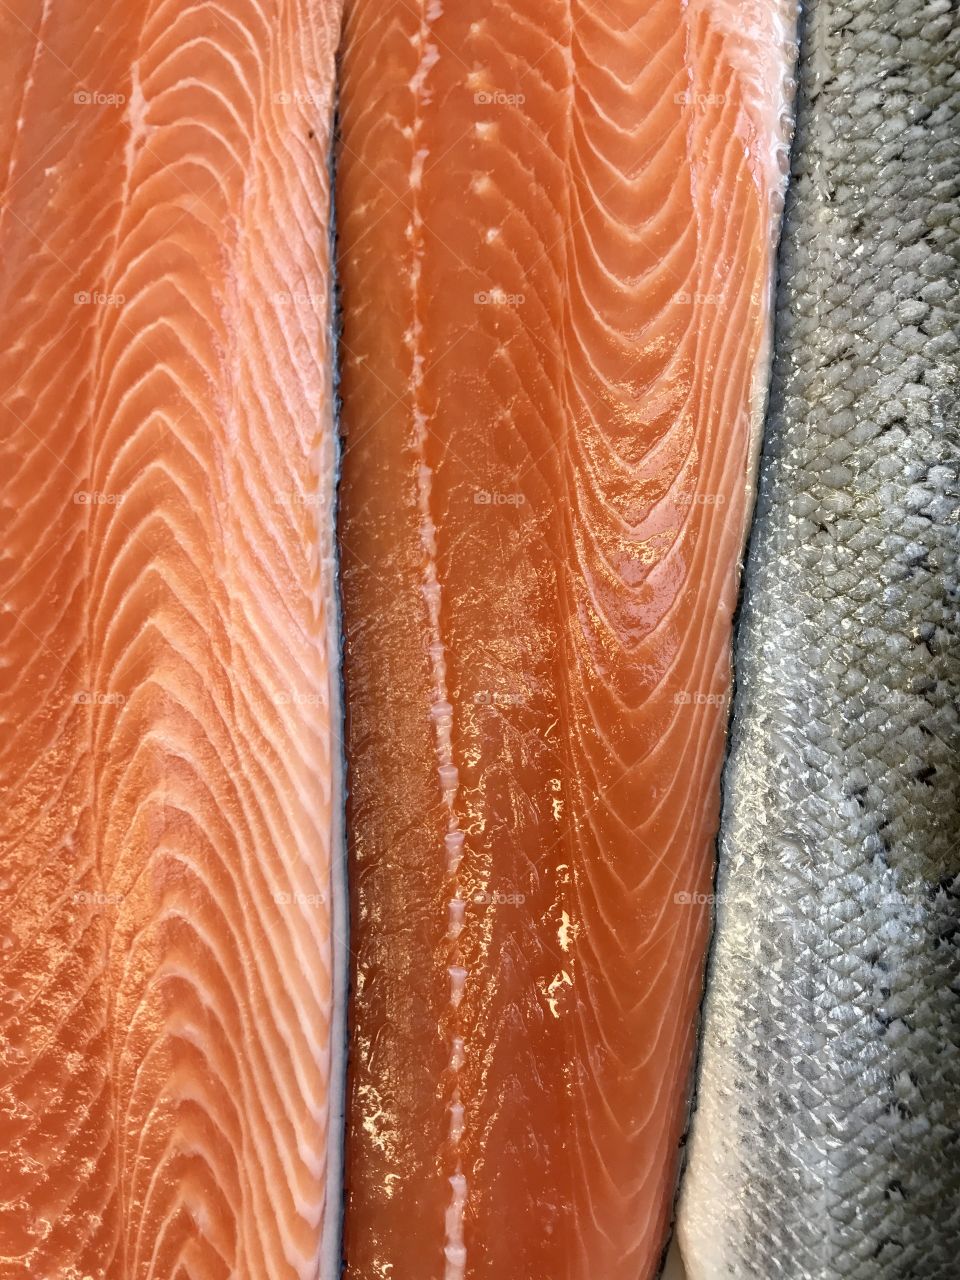 Salmon filets texture